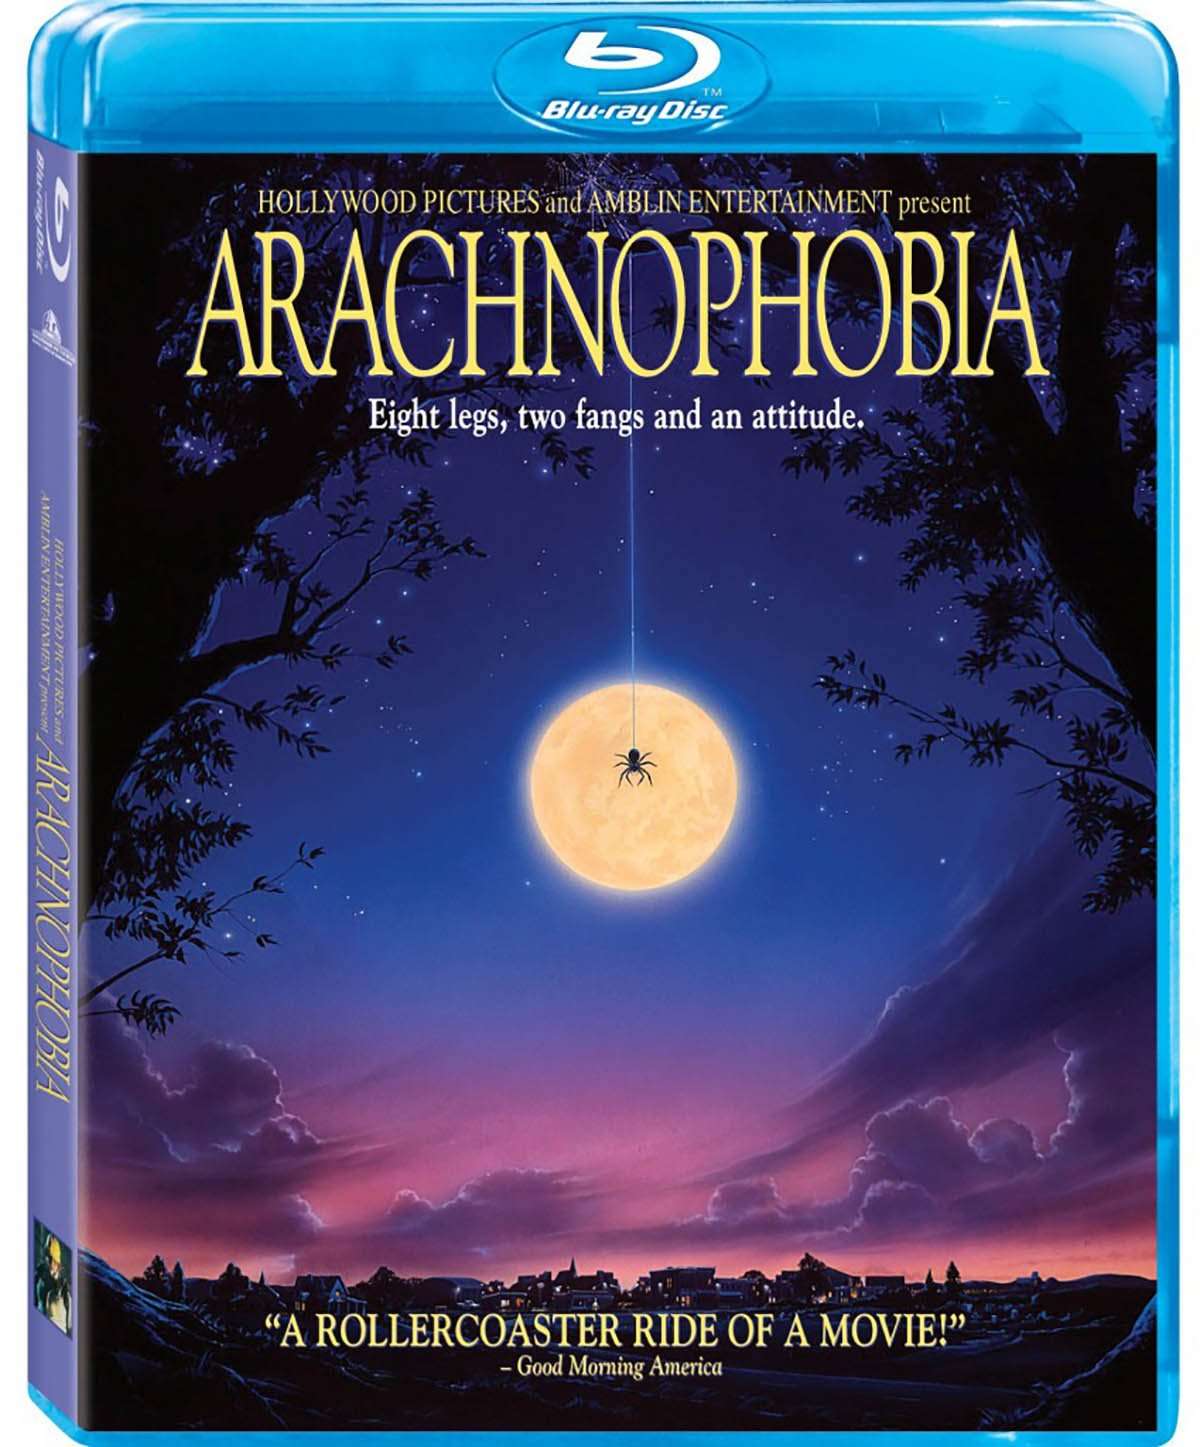 Aracnofobia (1990) FullHD BDRip 1080p Ac3 ITA (DVD Resync) DTS-HD MA  Ac3 ENG Subs - Krikk